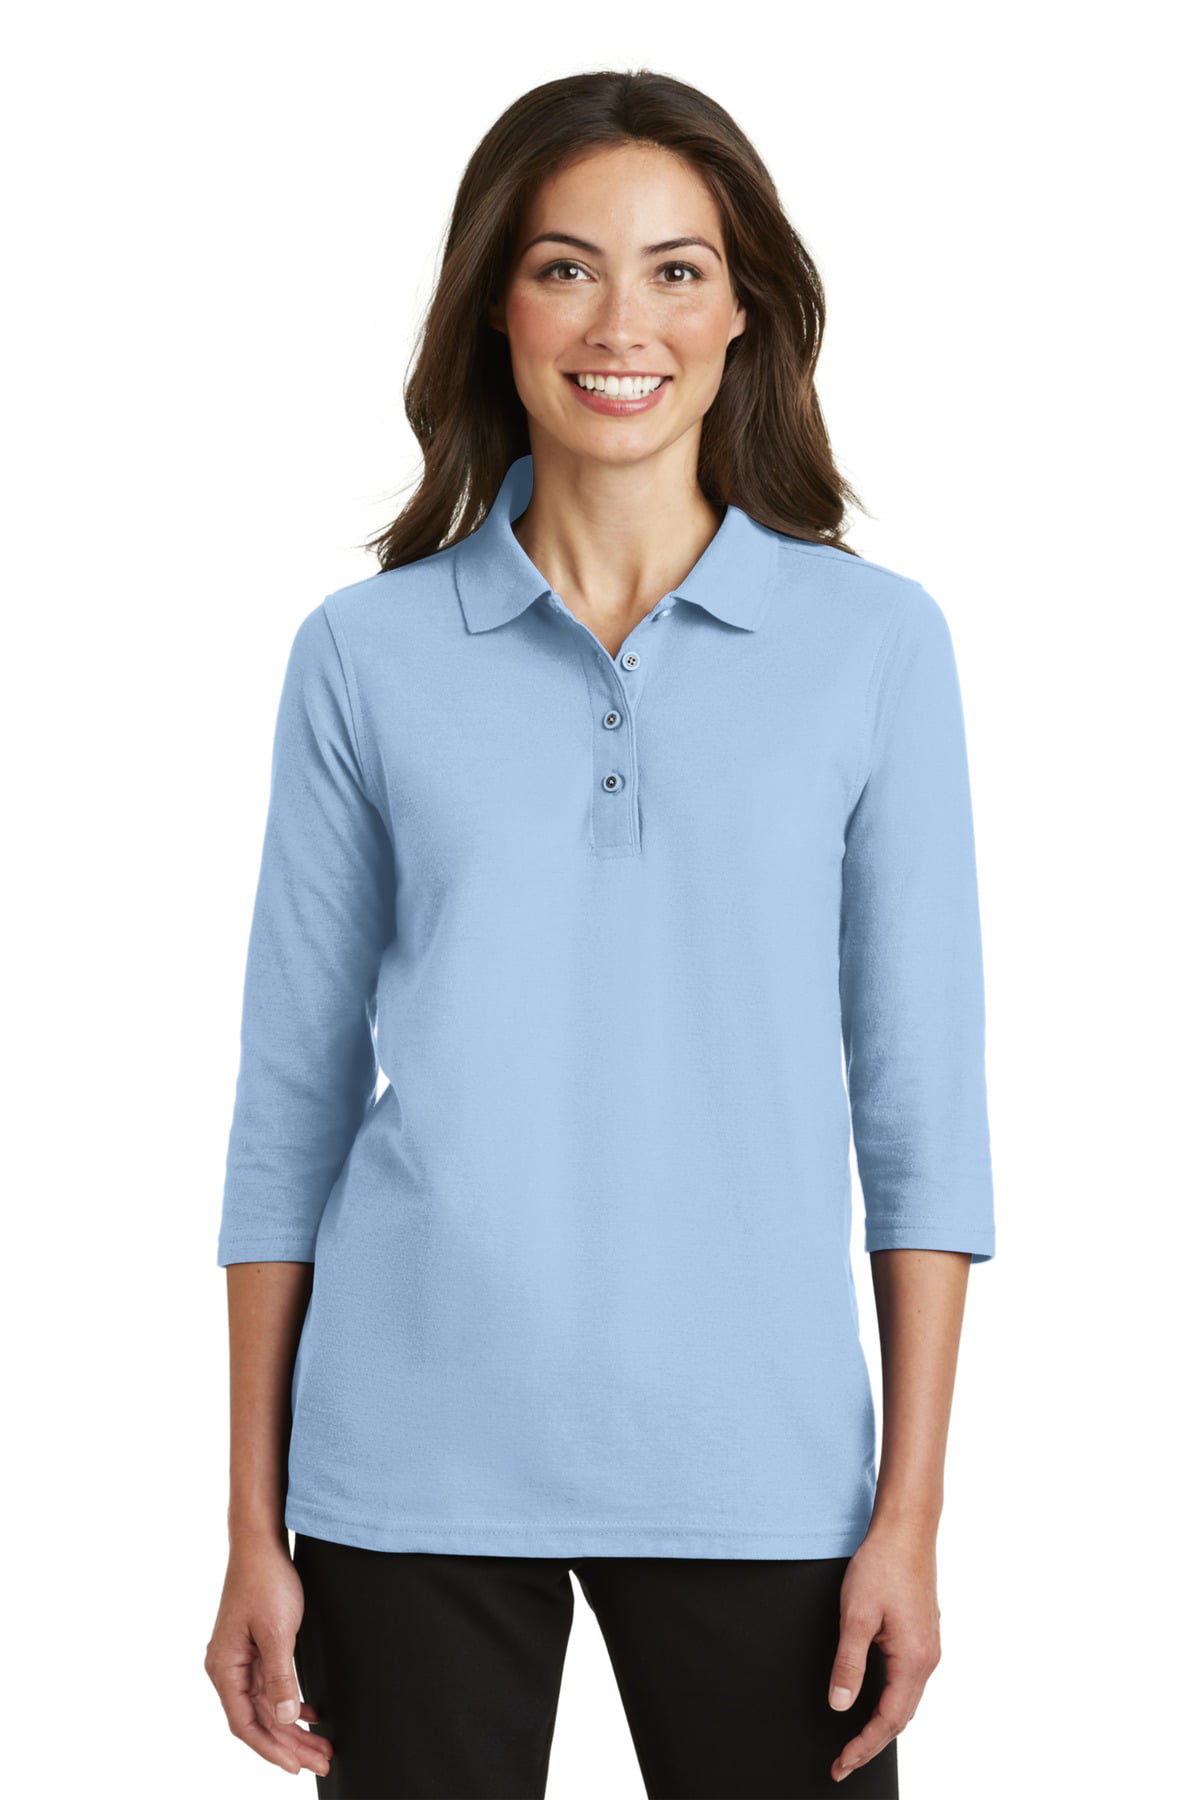 women's 3 button polo shirts